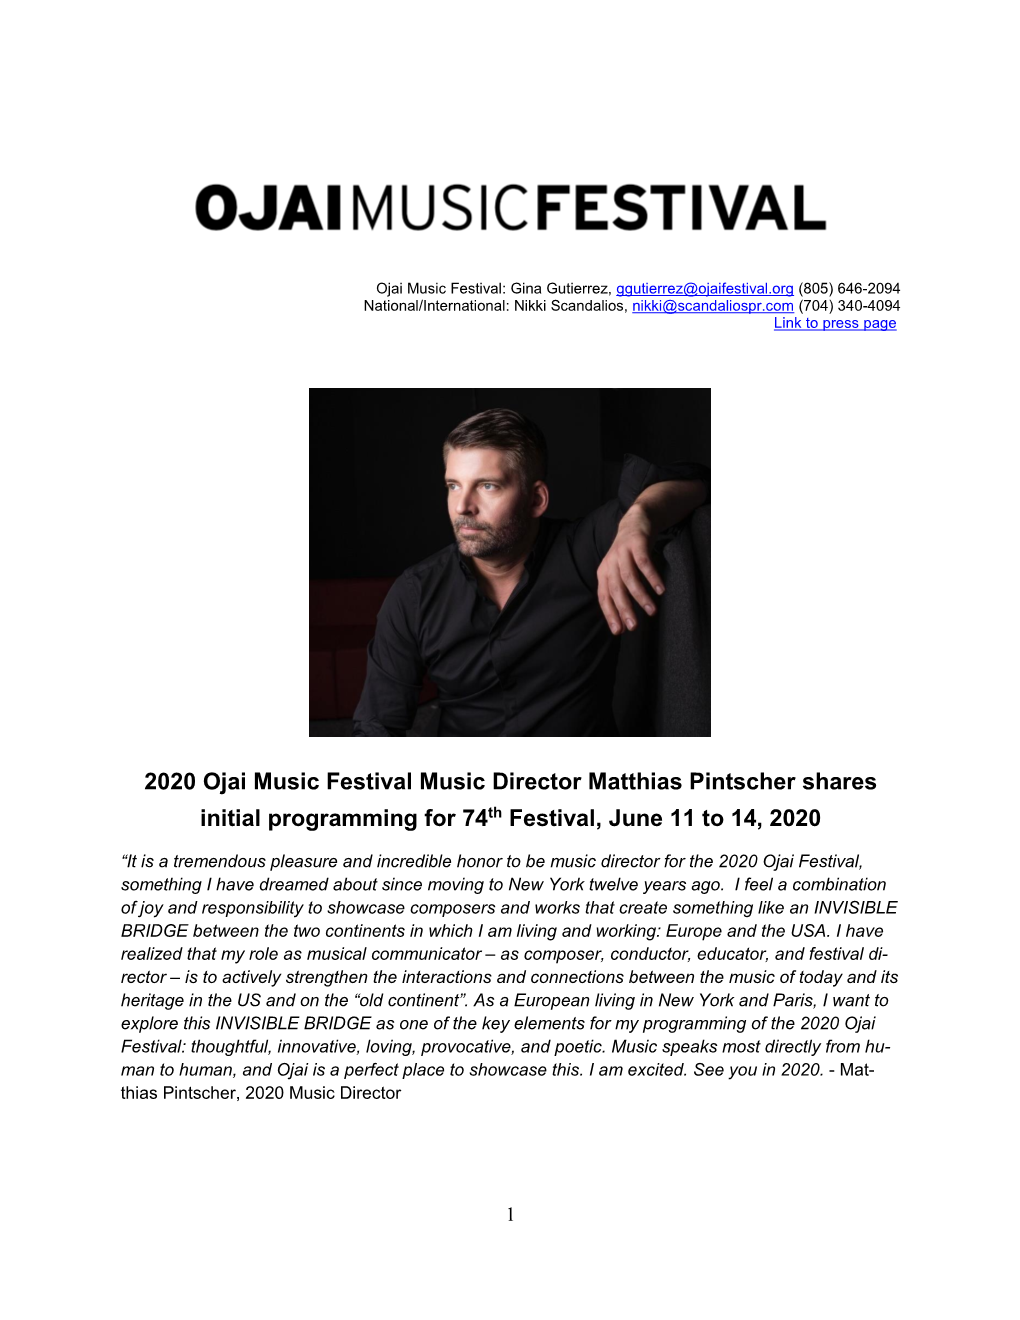 2020 Ojai Music Festival Music Director Matthias Pintscher Shares Initial Programming for 74Th Festival, June 11 to 14, 2020